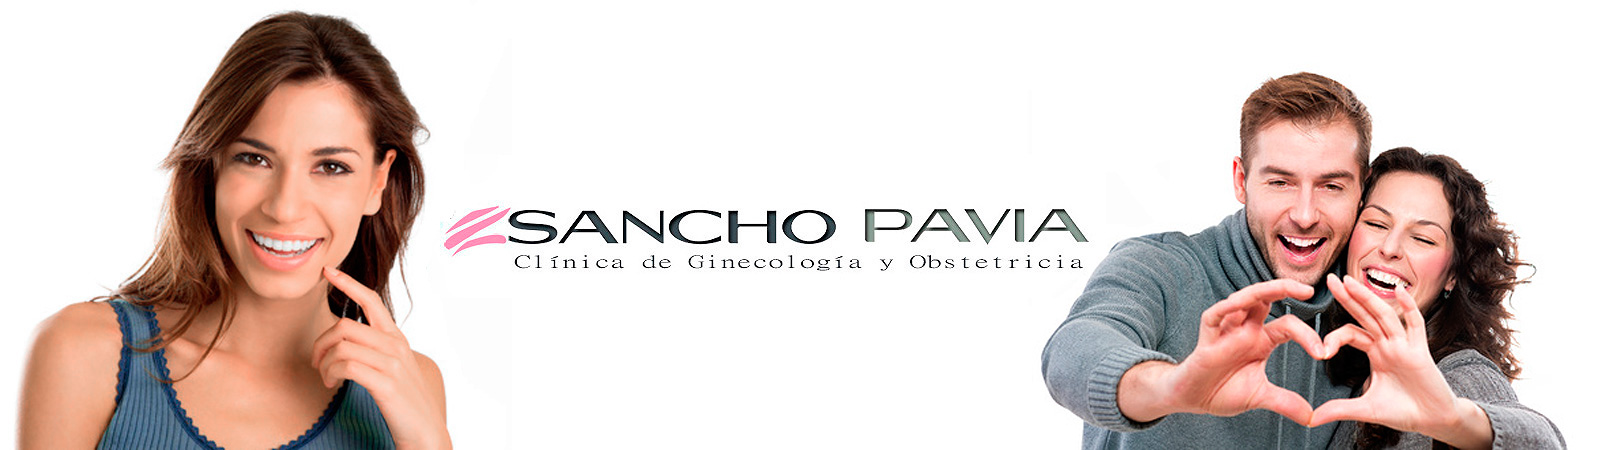 Servicios de conservación del cordón Umbilical. Clinica Sancho Pavia